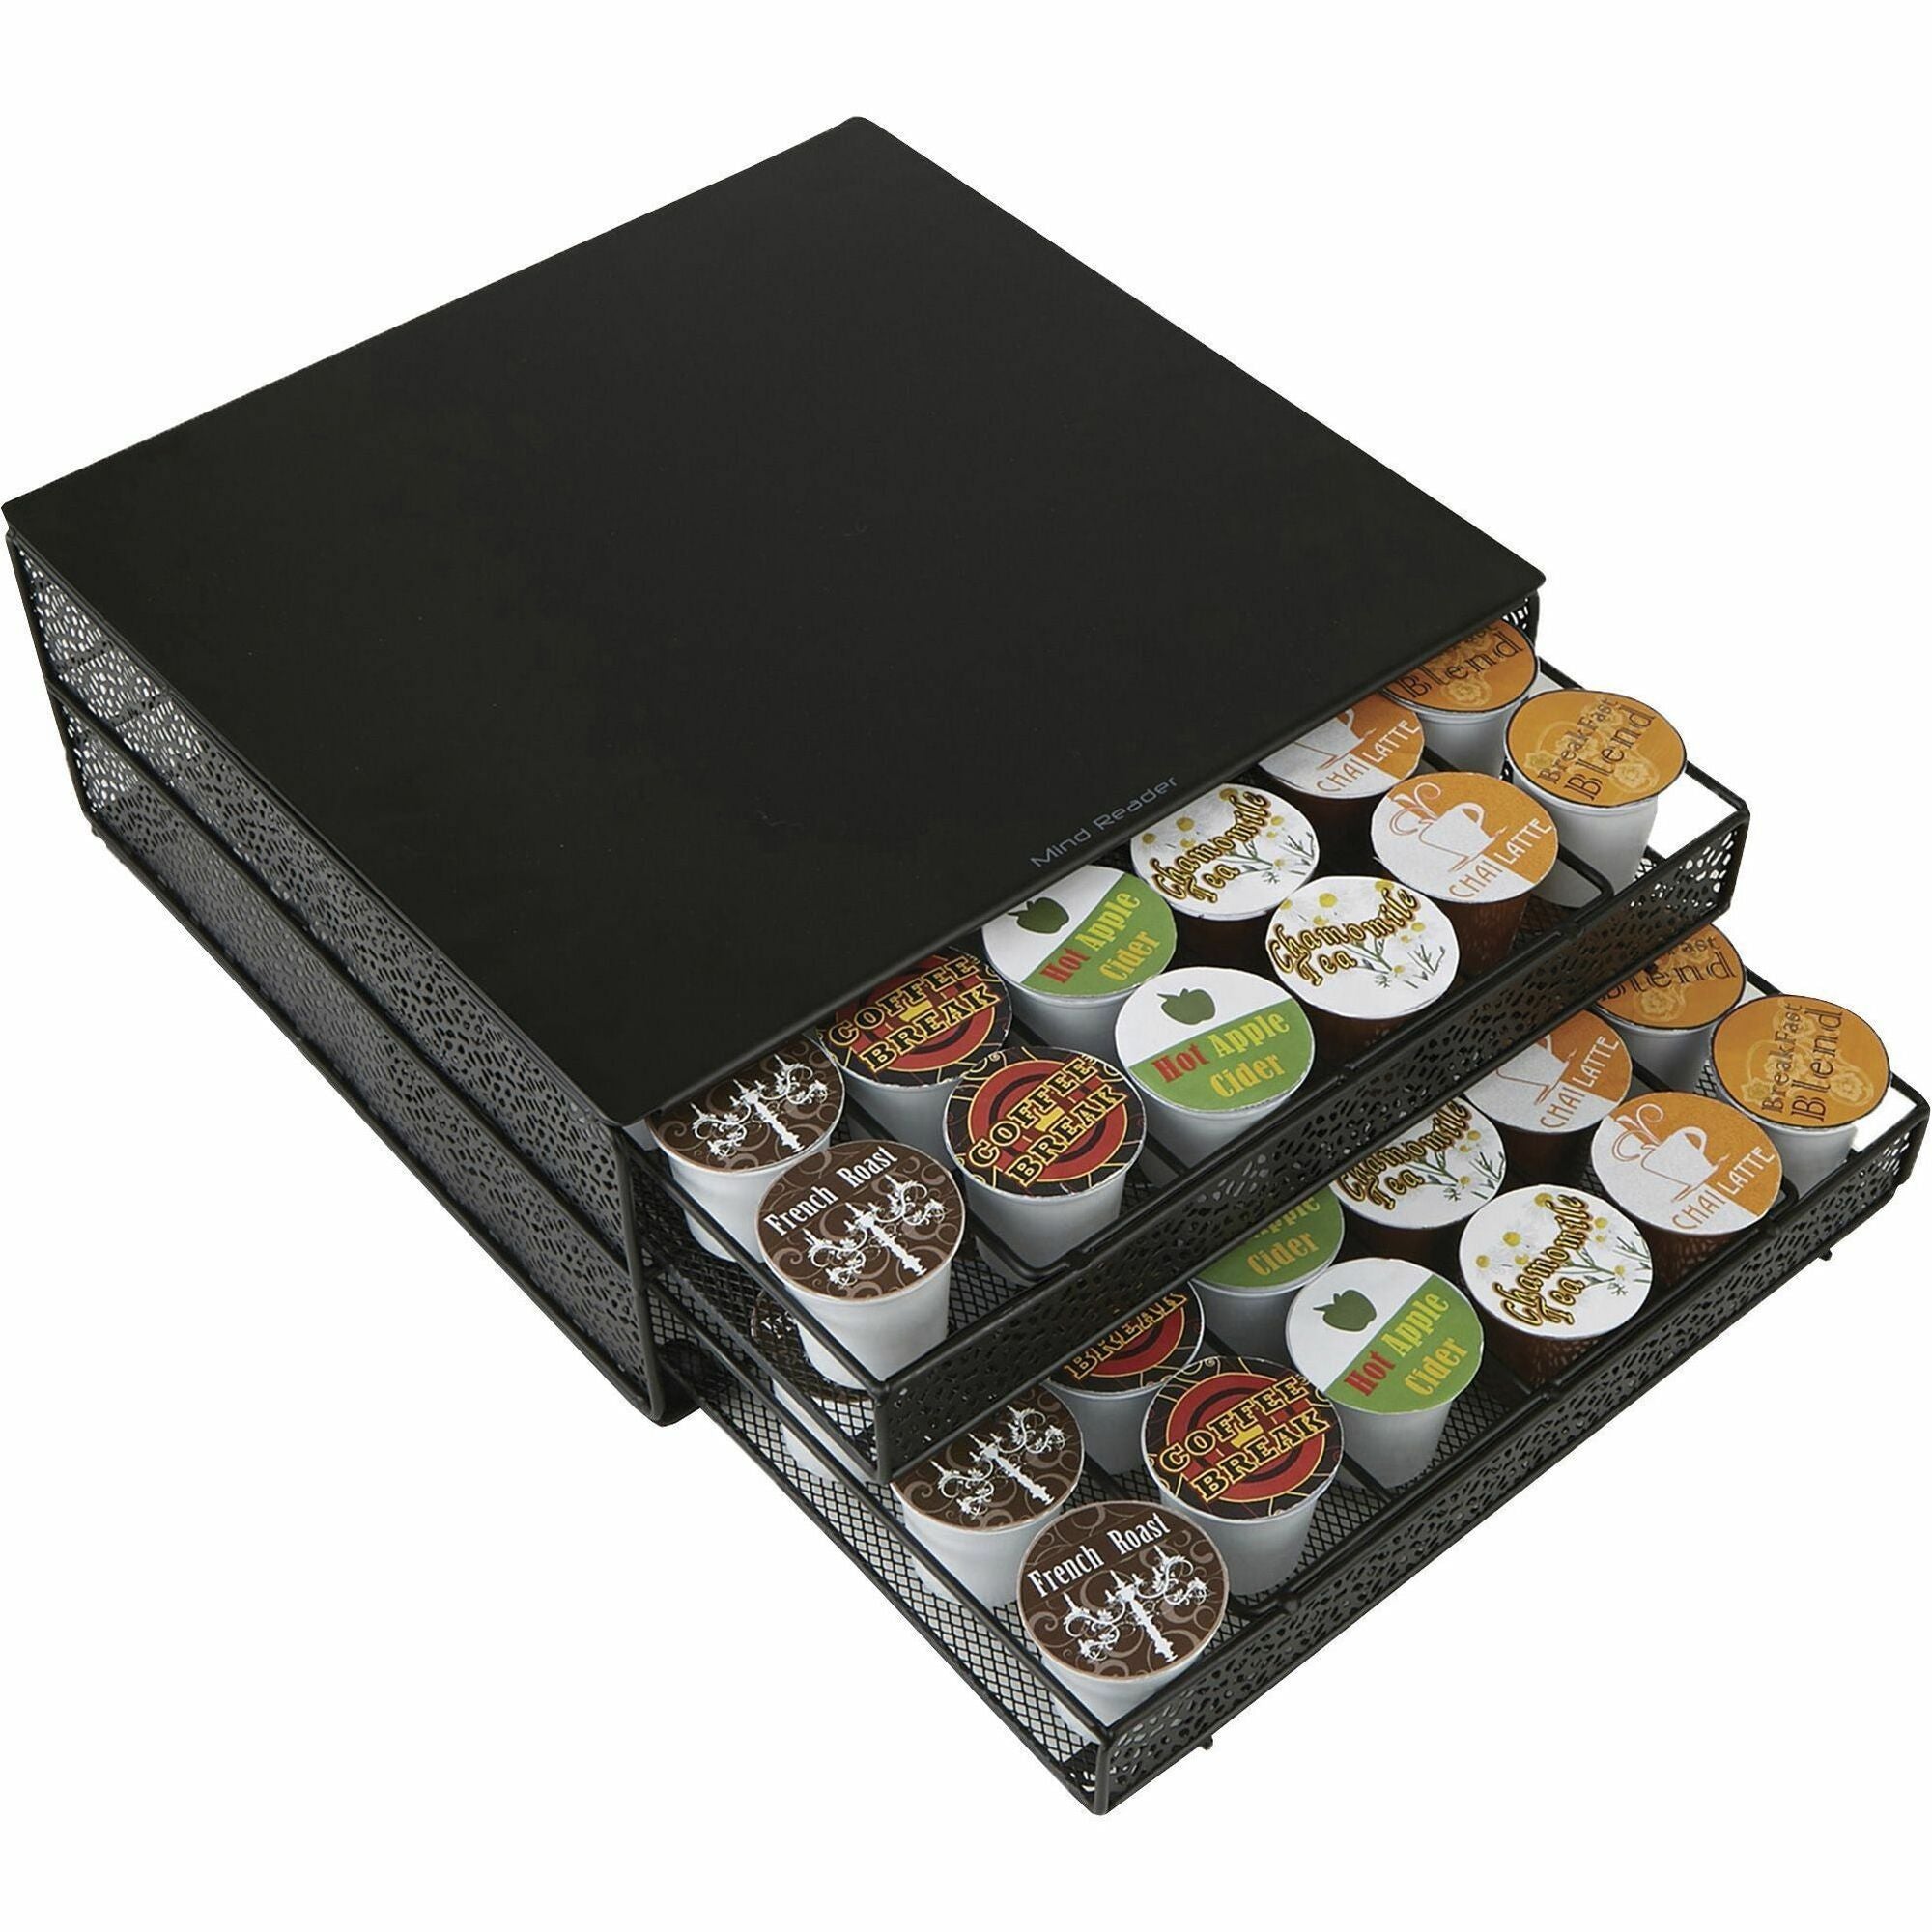 mind-reader-72-pod-coffee-storage-72-x-coffee-pod-2-drawers-51-height-x-13-width128-length-black-1-each_emsdbmtrayblk - 1